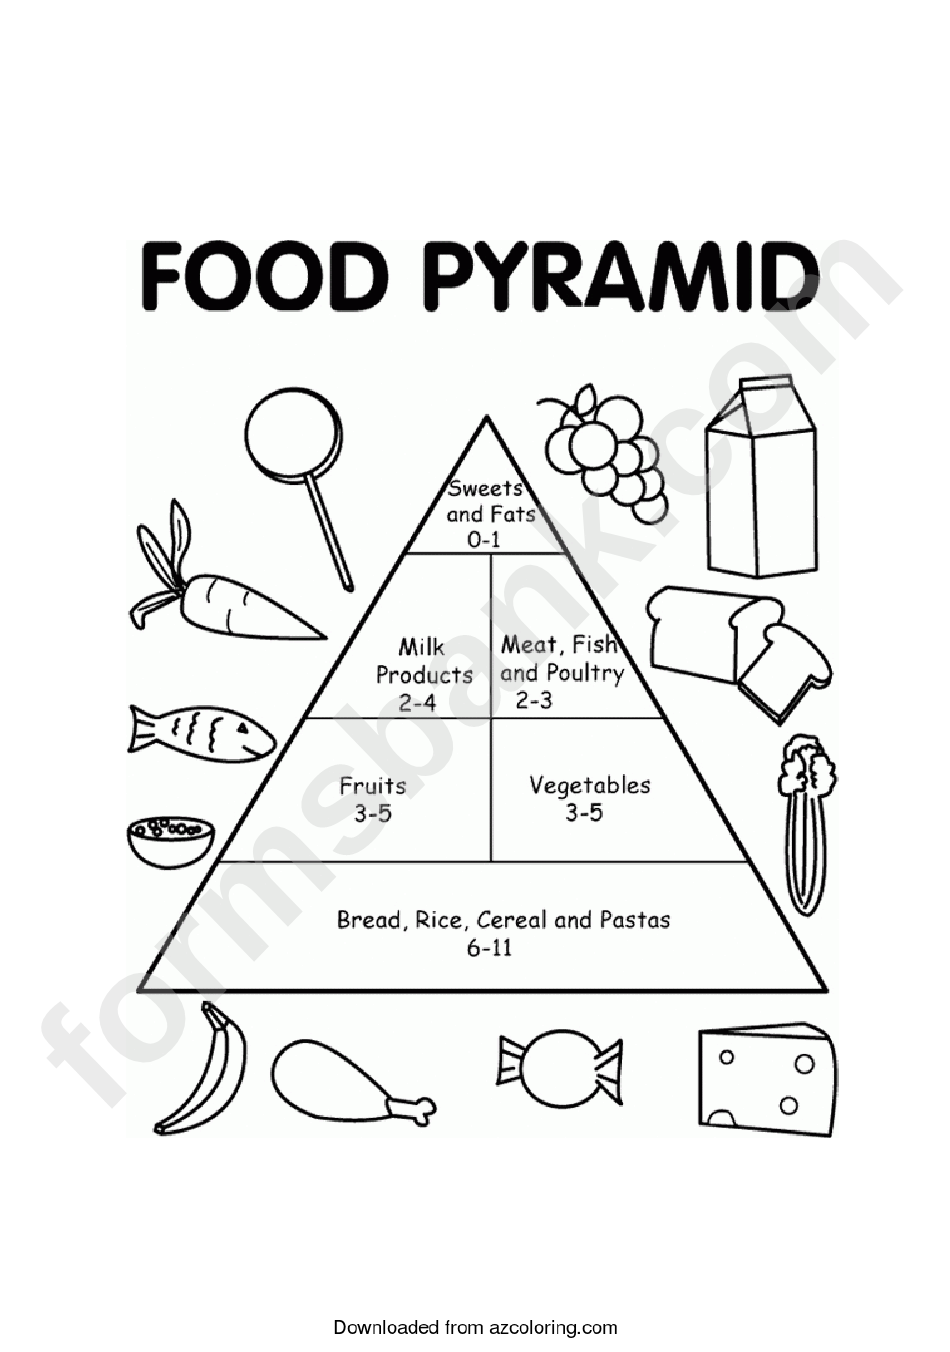 Food pyramid 2020